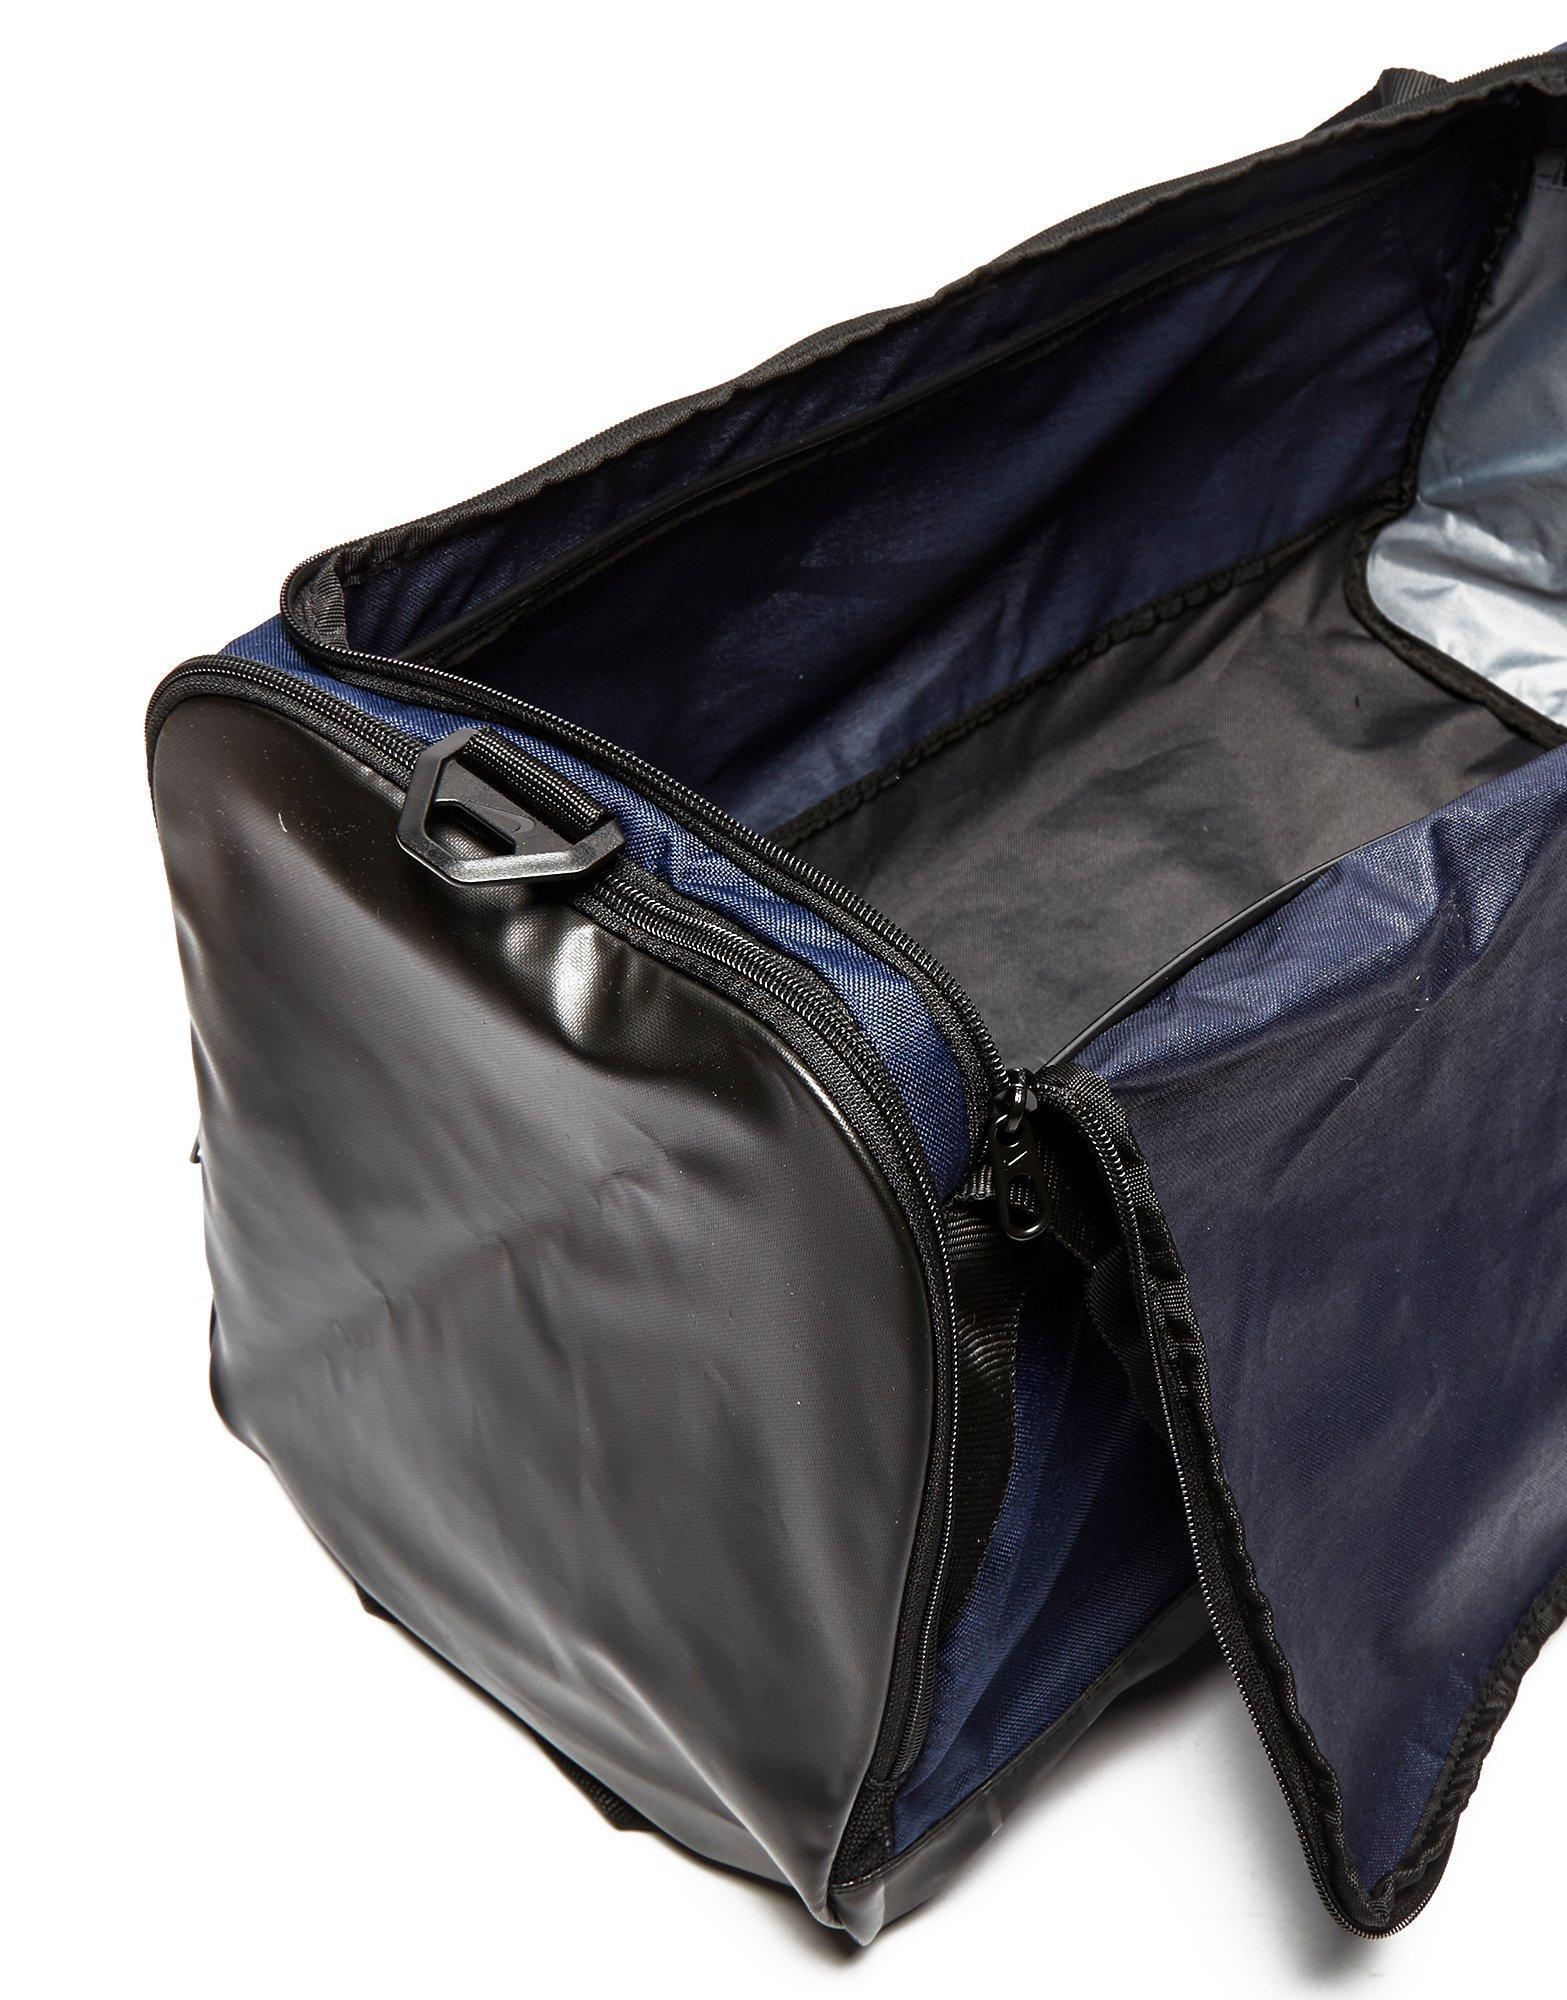 Nike Synthetic Brasilia Medium Duffle Bag in Navy Blue (Blue) for Men - Lyst